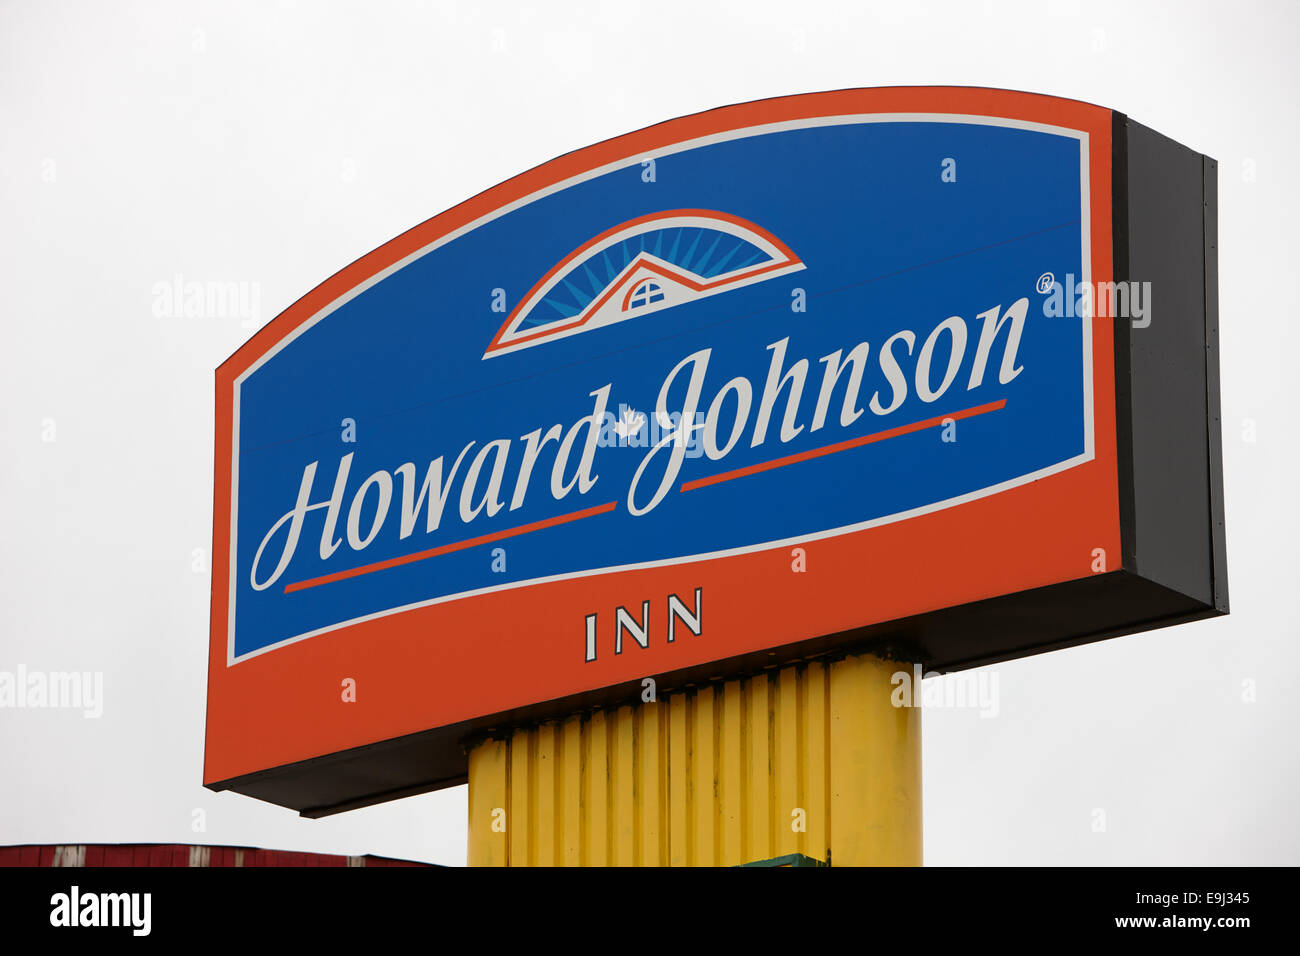 howard johnson inn hotel sign on highway in swift current Saskatchewan Canada Stock Photo